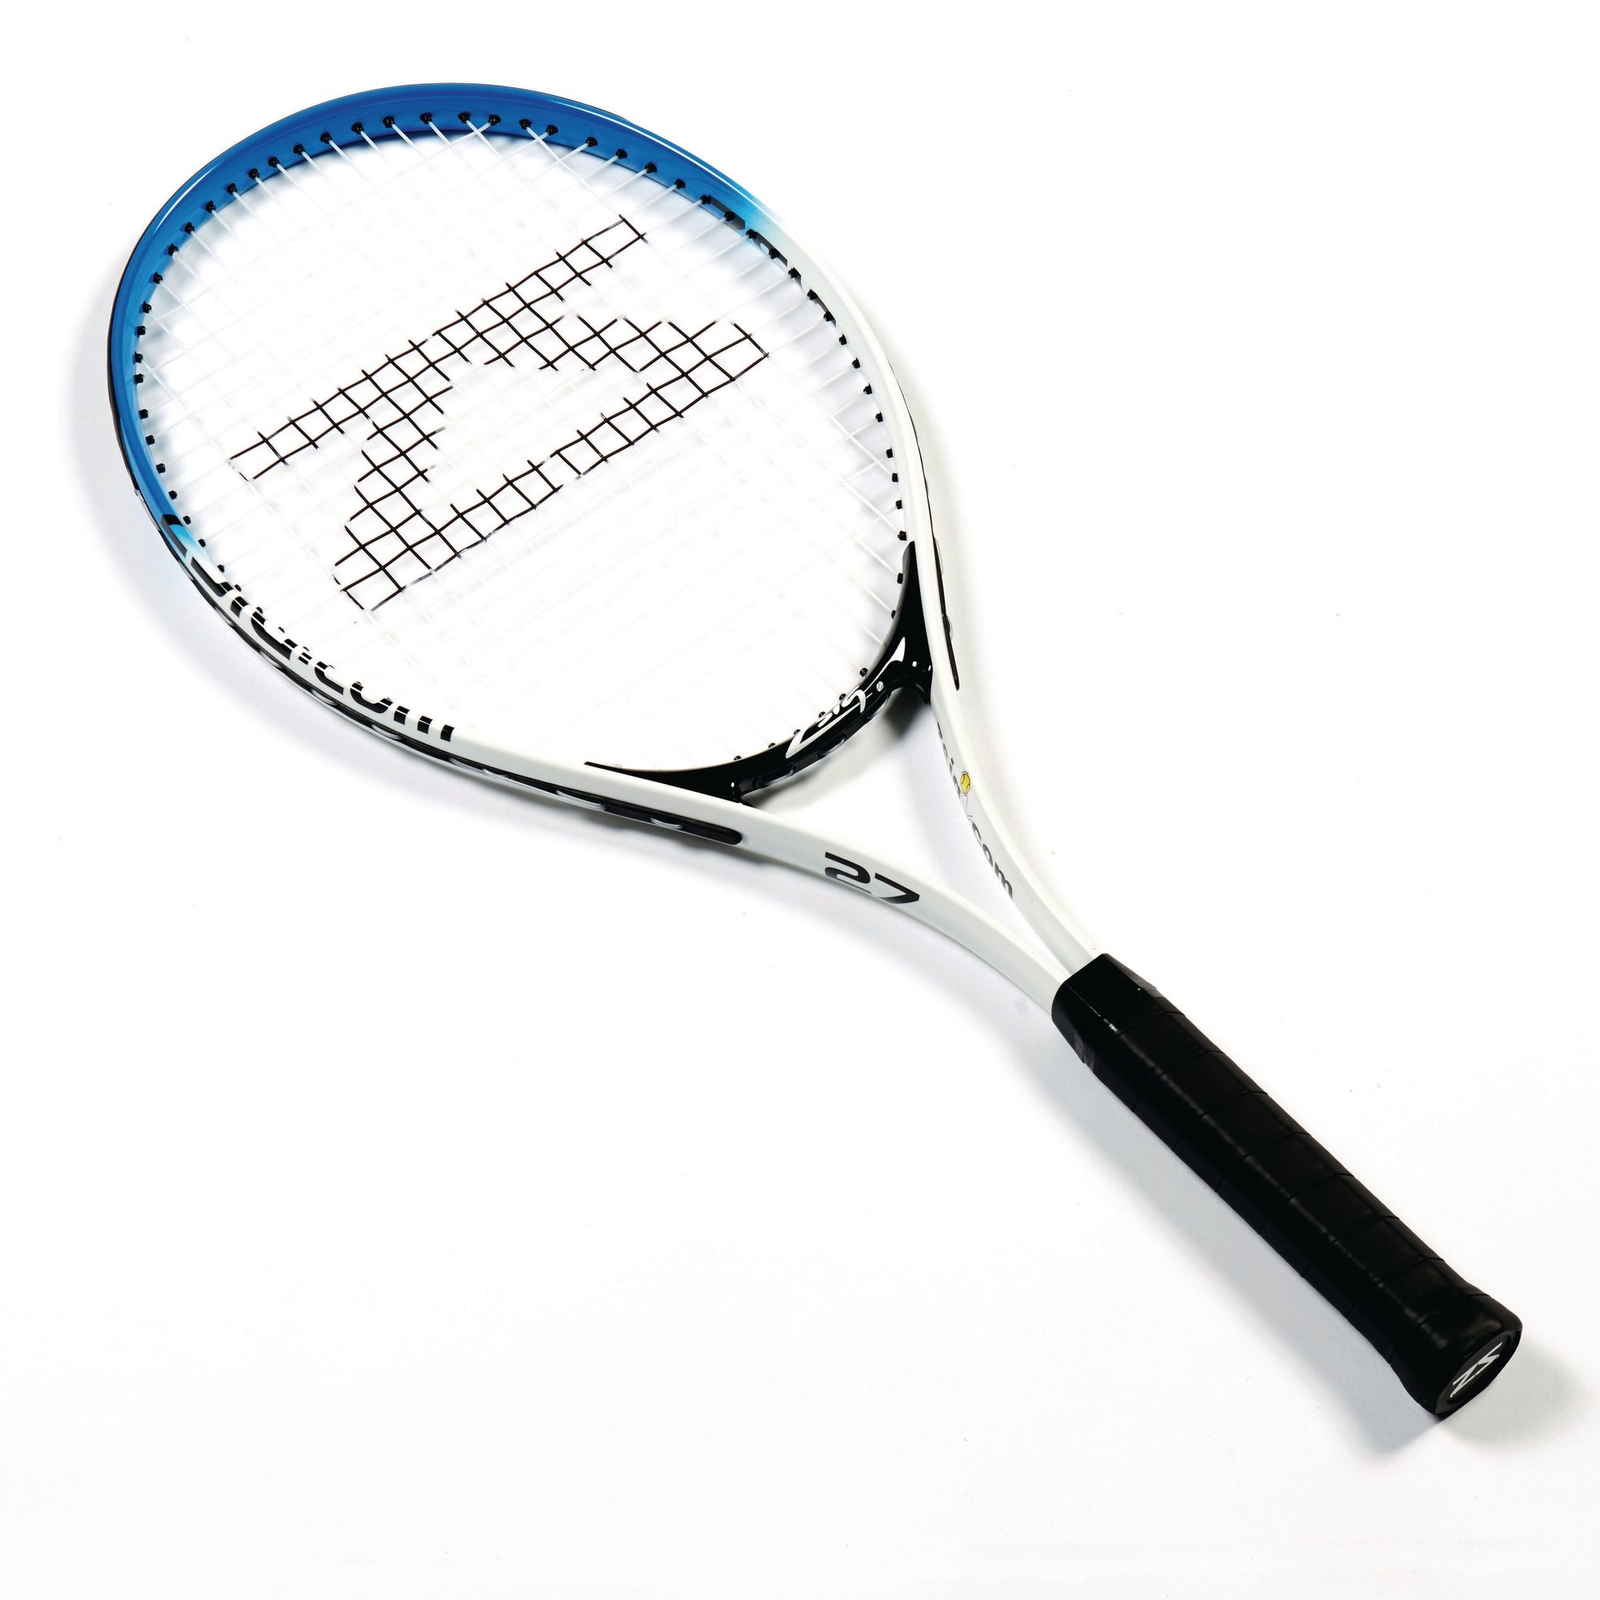 Zsig Tennis Racket - Blue - 27in - Each